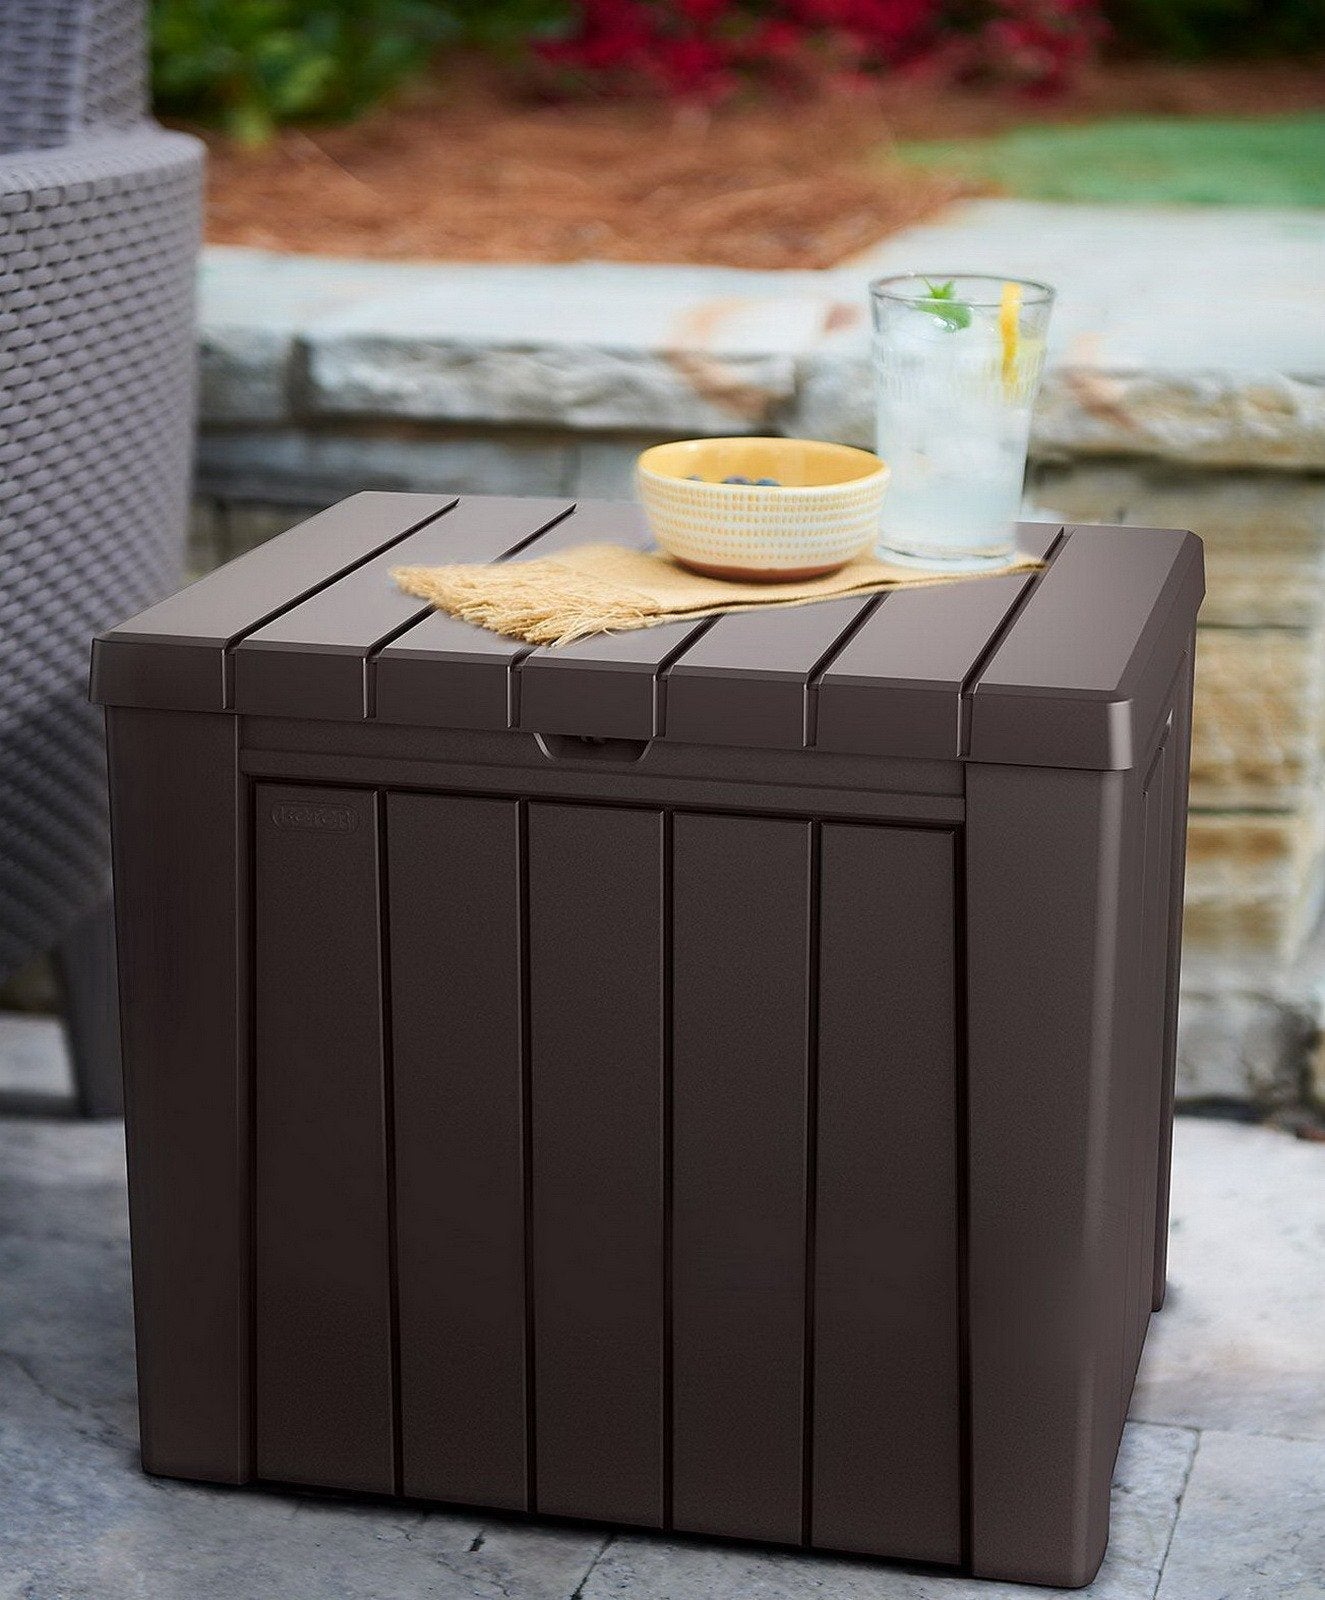 Keter 30 Gallon Resin Outdoor Deck Box Storage Table Weatherproof